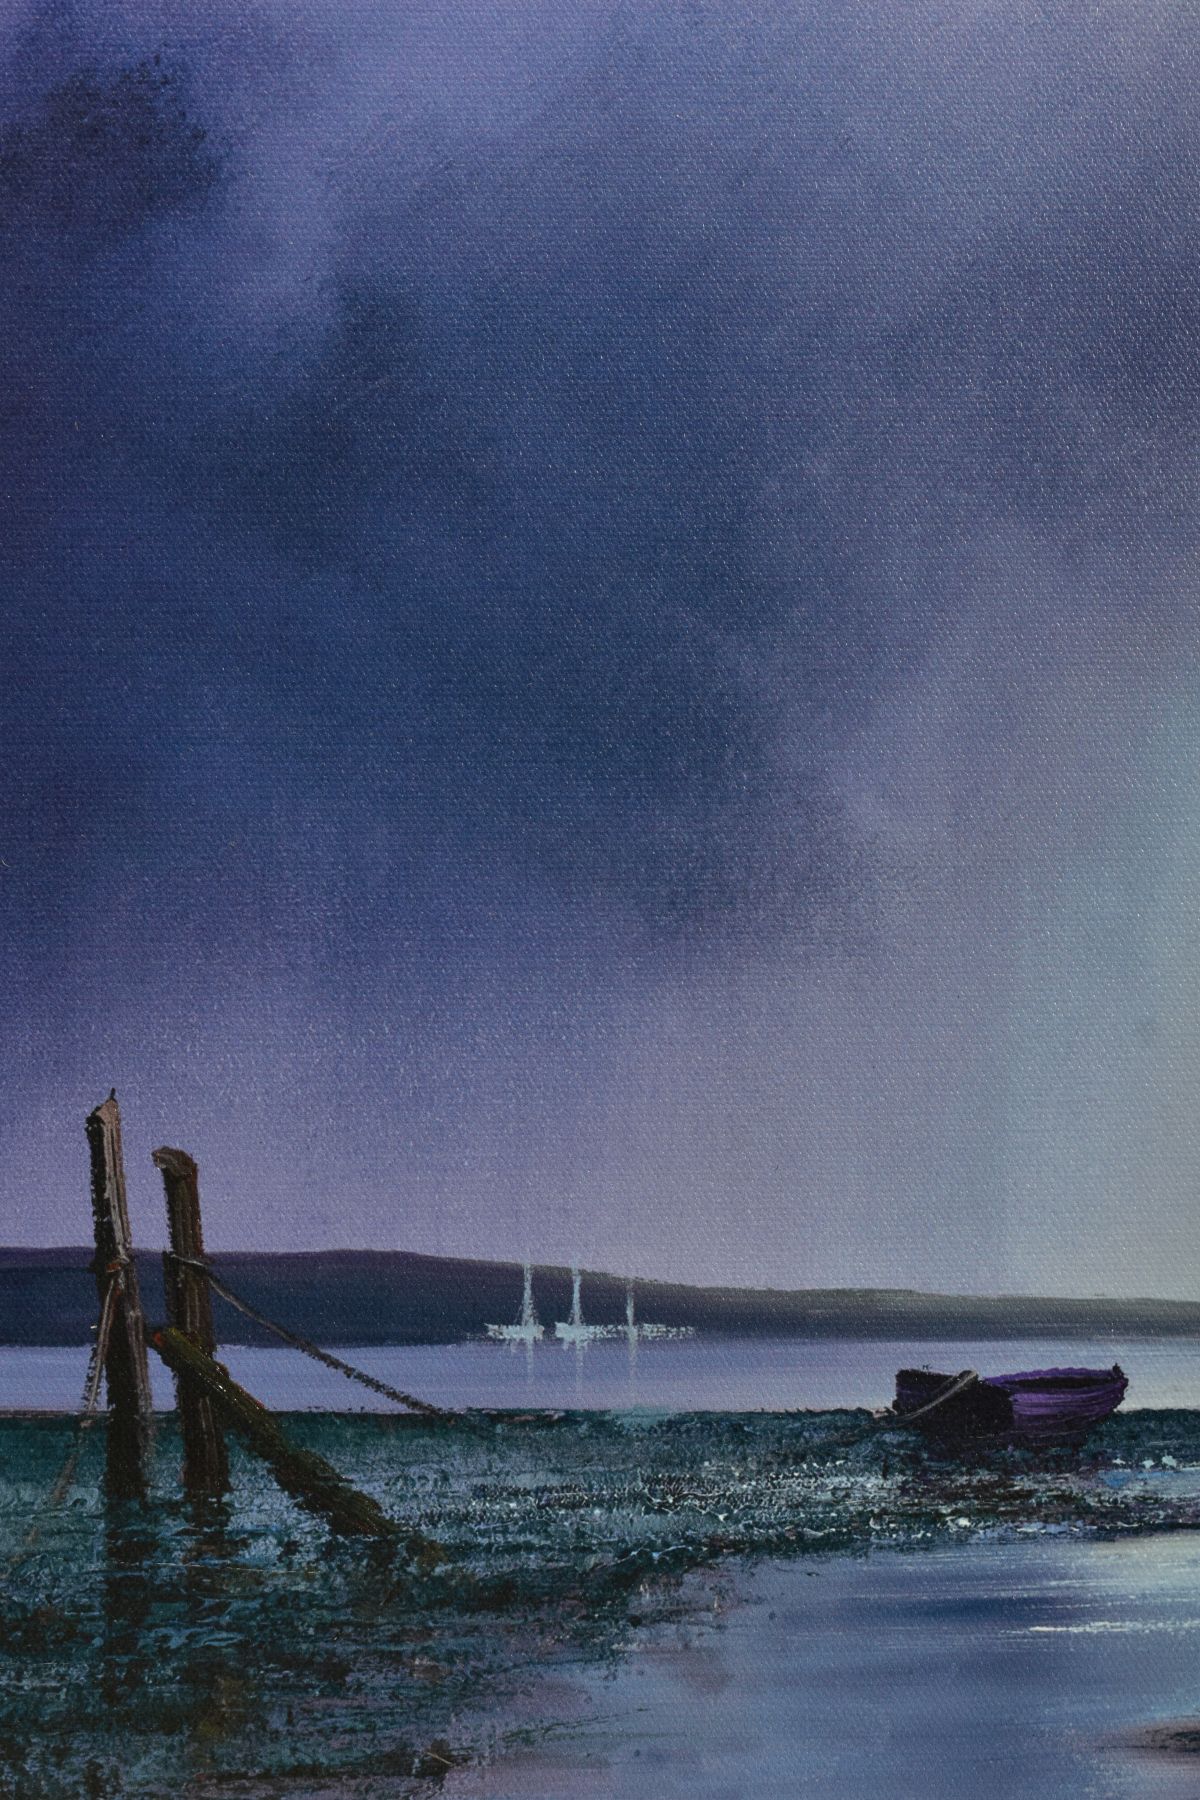 BARRY HILTON (BRITISH 1941) 'VIOLET DAWN', a signed limited edition print of a coastal landscape - Image 3 of 6